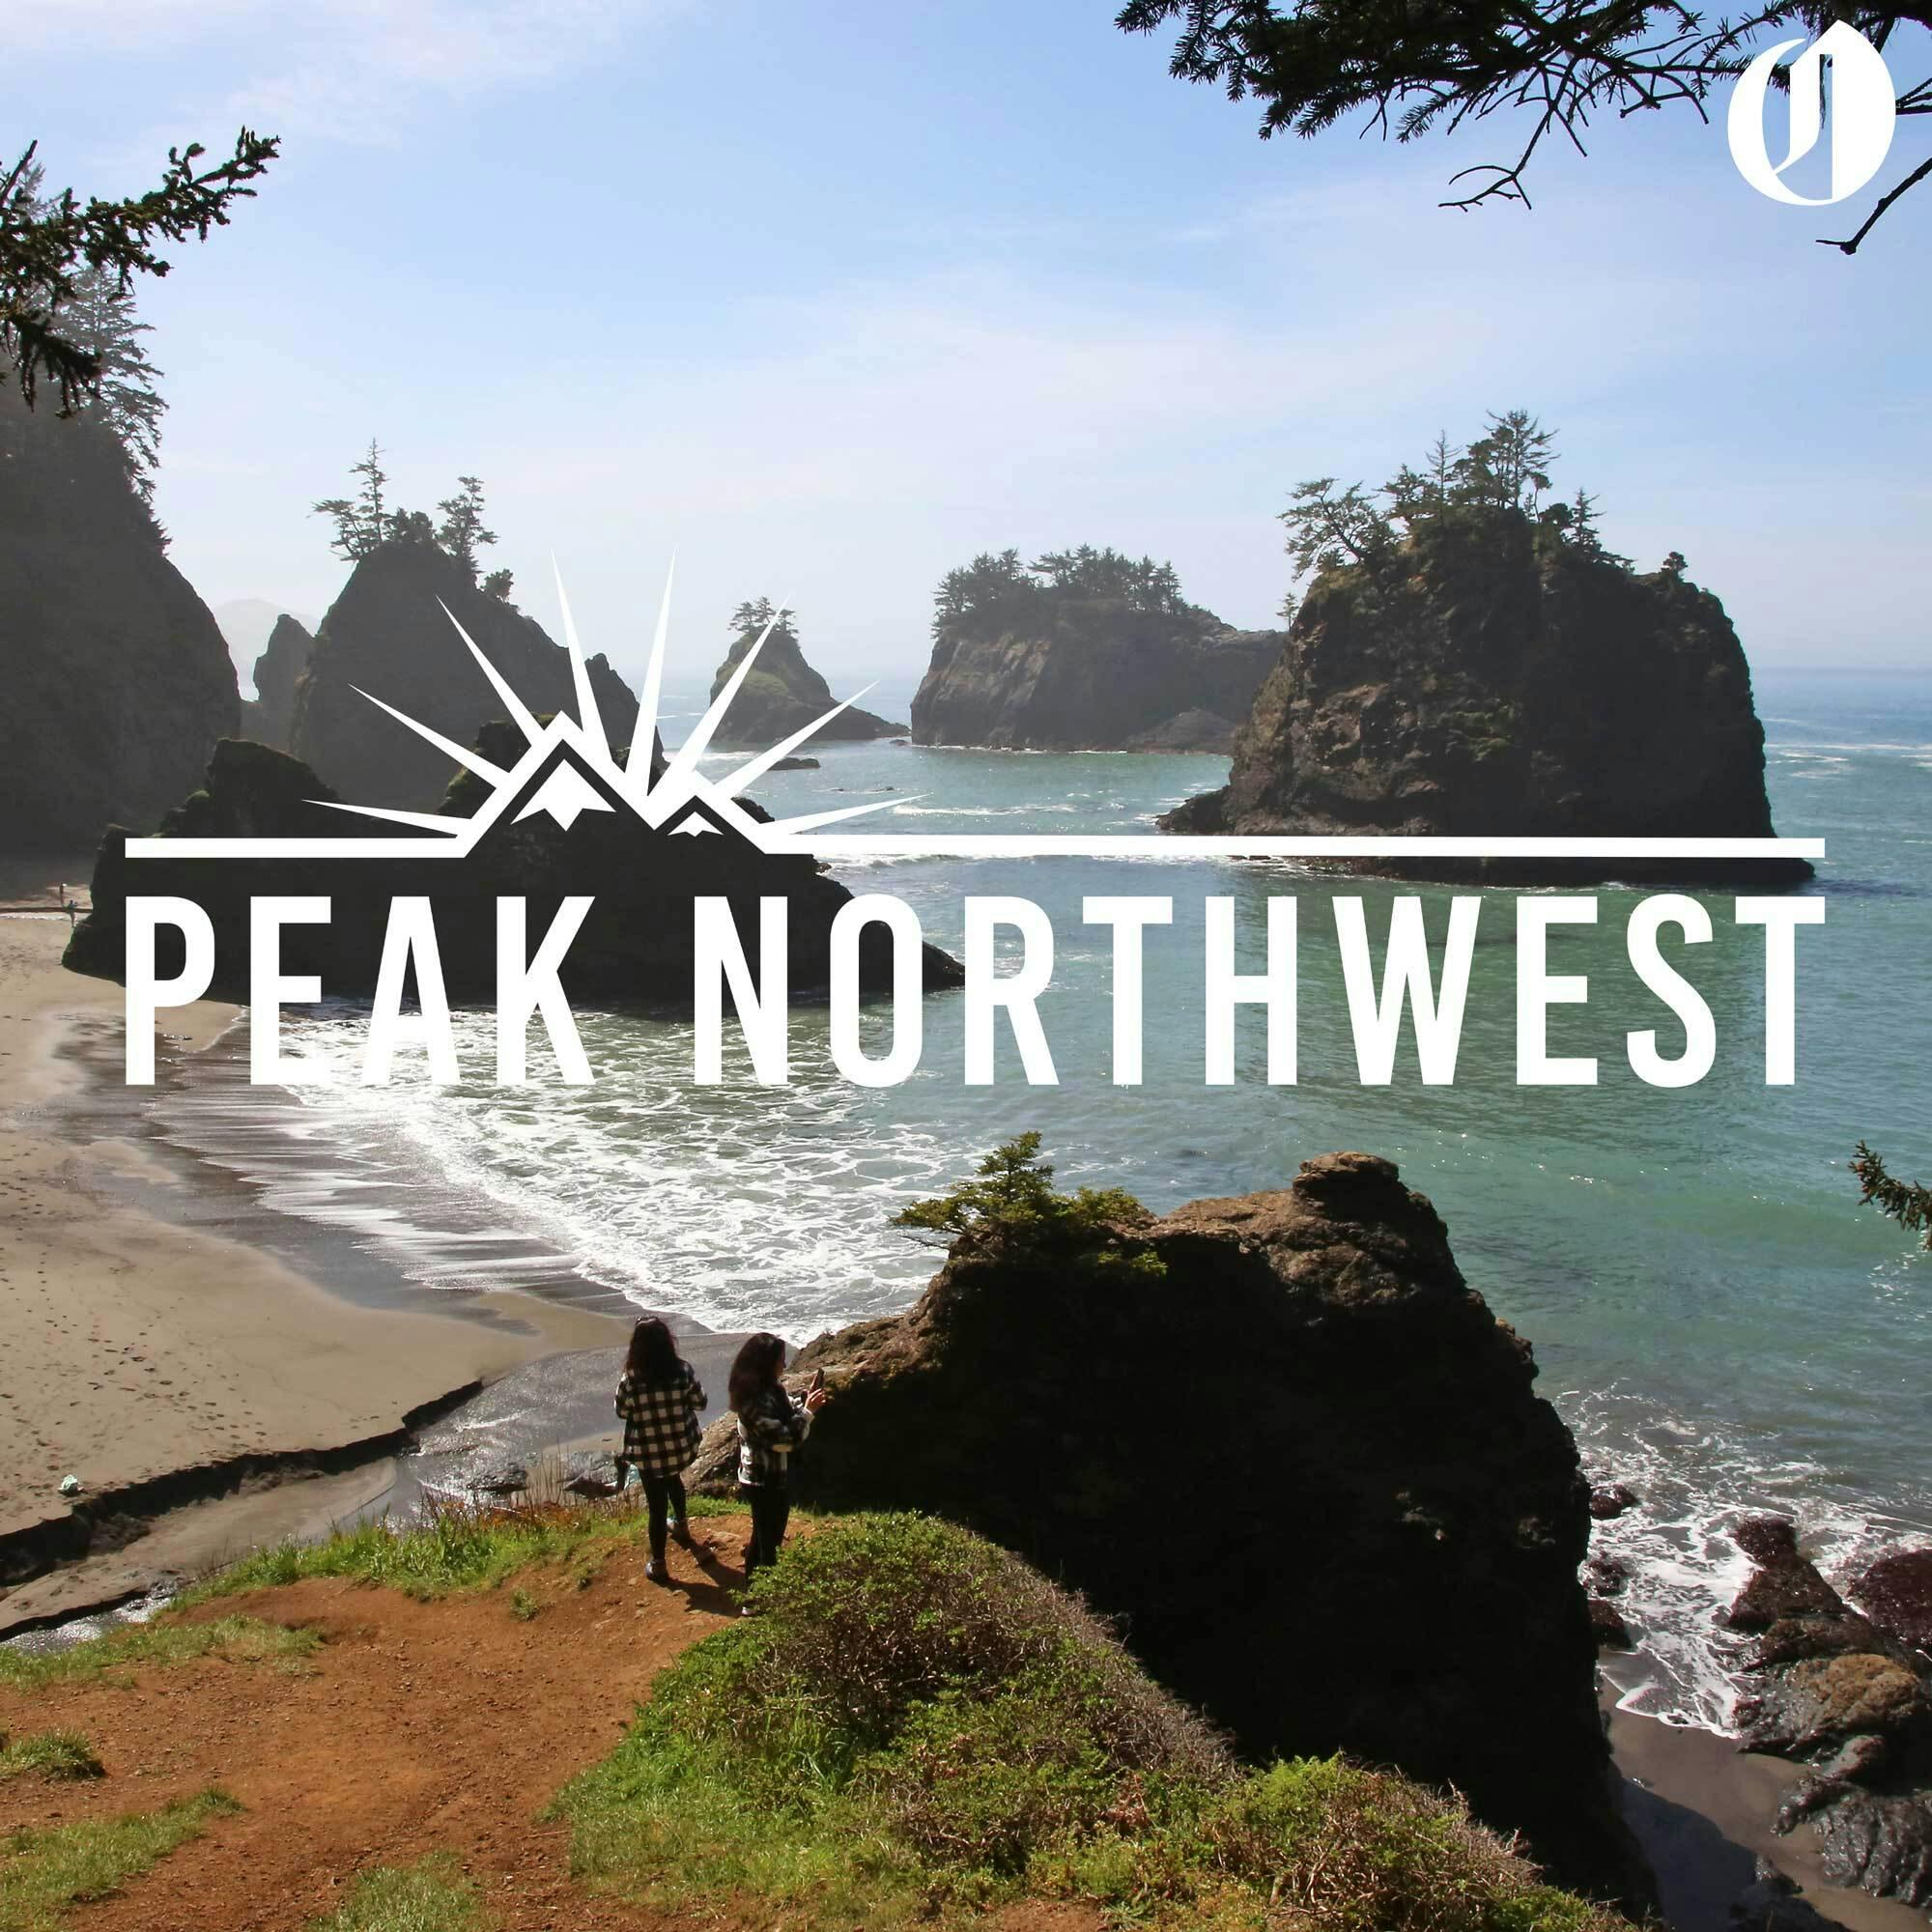 Take a trip to the scenic Boardman Corridor on the Oregon coast